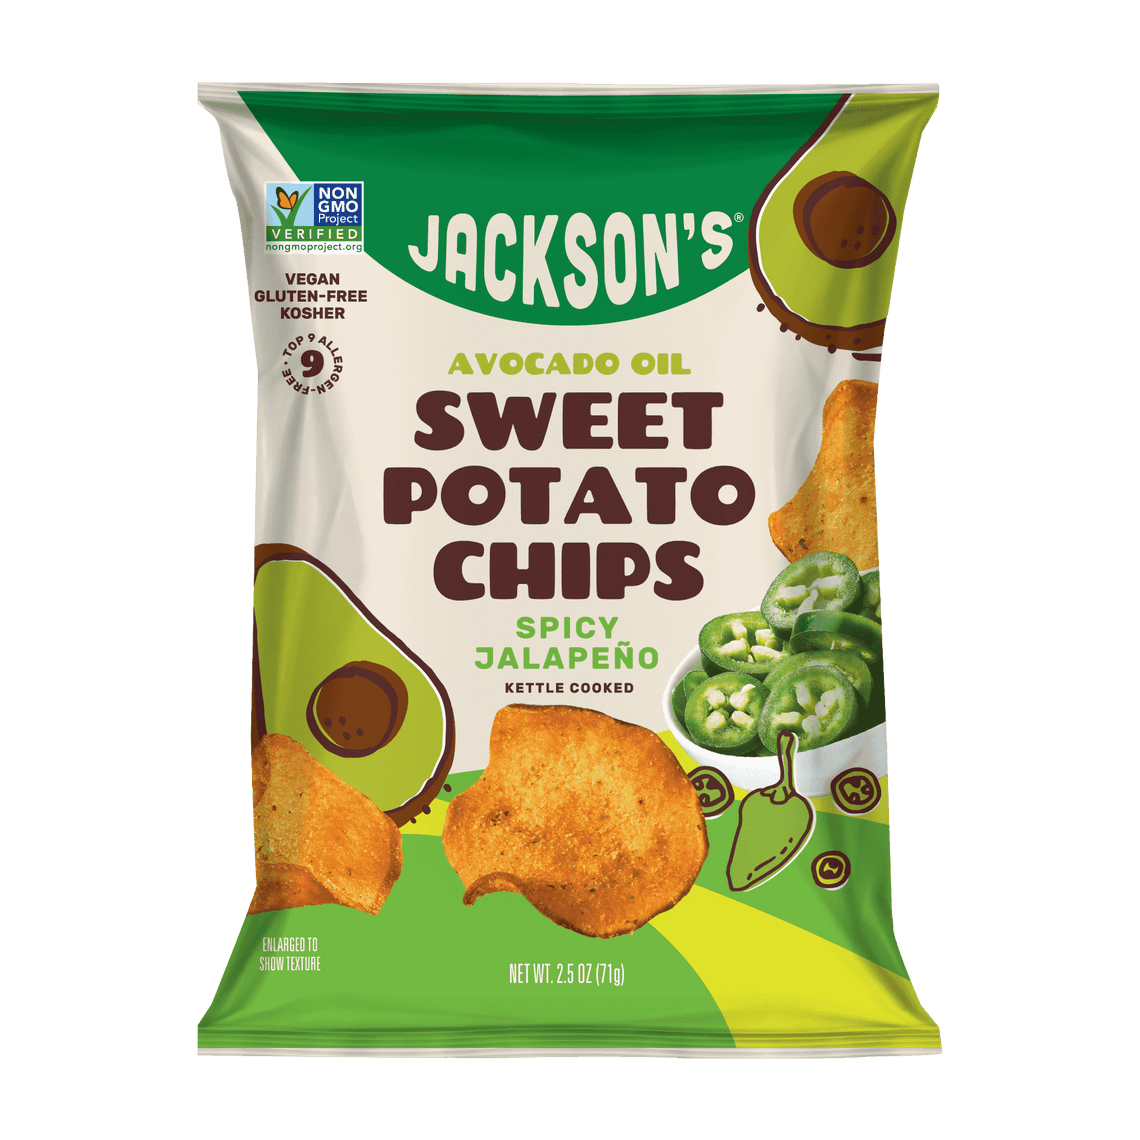 Jackson's kettle-cooked Spicy Jalapeño Sweet Potato Chips in premium Avocado Oil 2.5oz. No seed oils & gluten-free snack